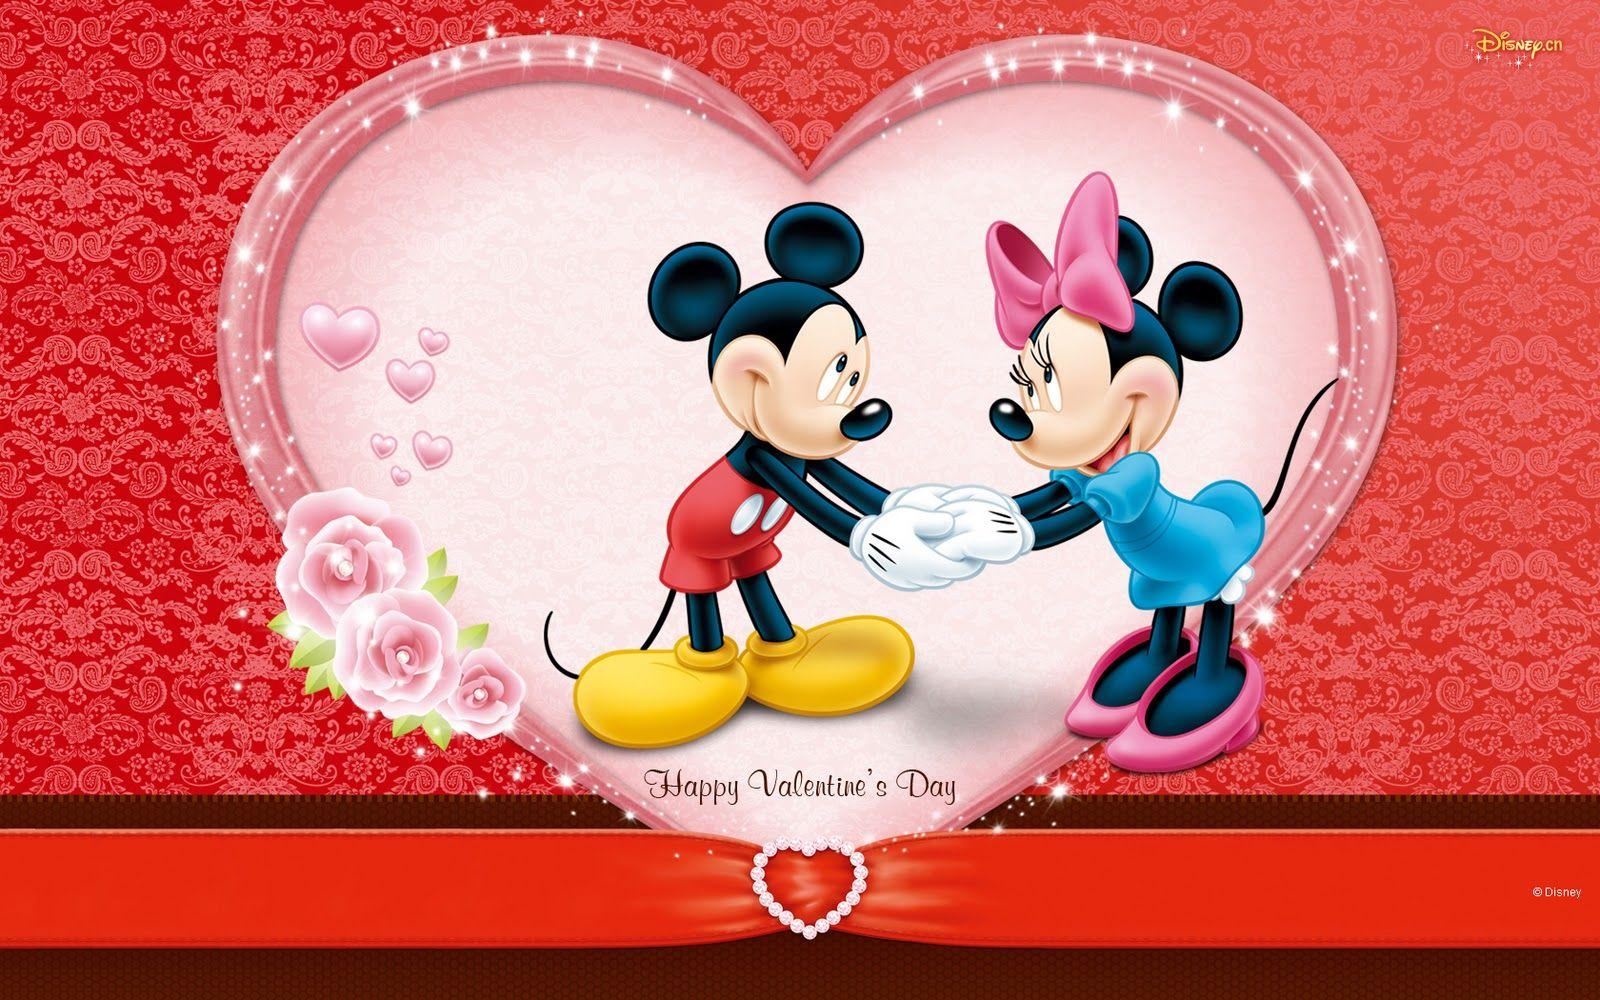 Disney Valentine's Day Wallpaper. Valentine's Day